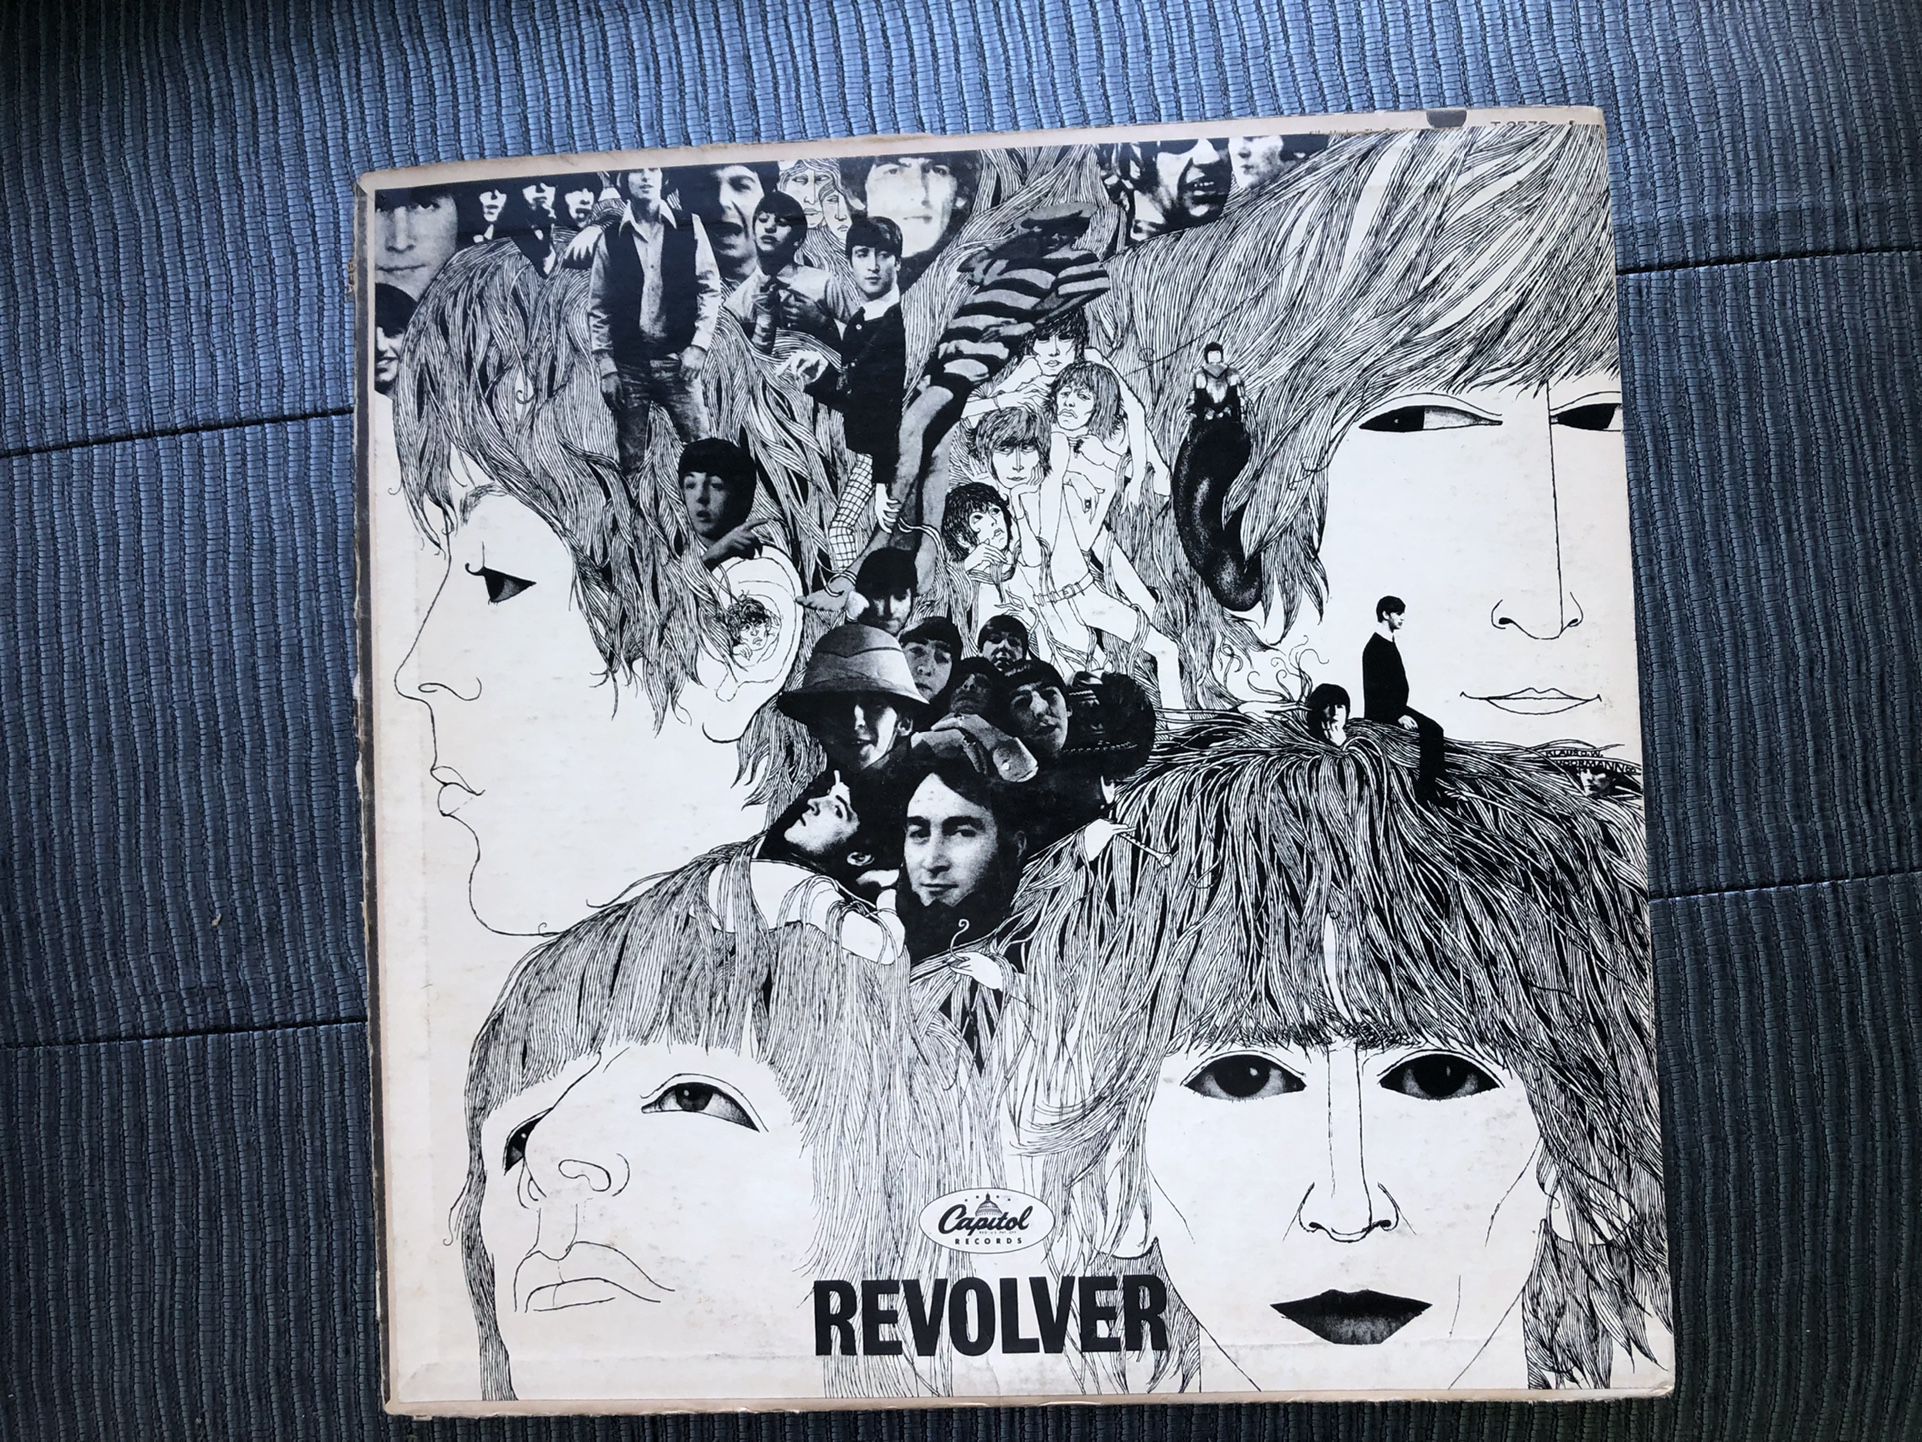 VINYL BEATLES Revolver John Lennon Plastic Ono Band DOUBLE FANTASY ROLLING STONES 1966 - HITS JETHRO TULL Thick As A BRICK Albums 